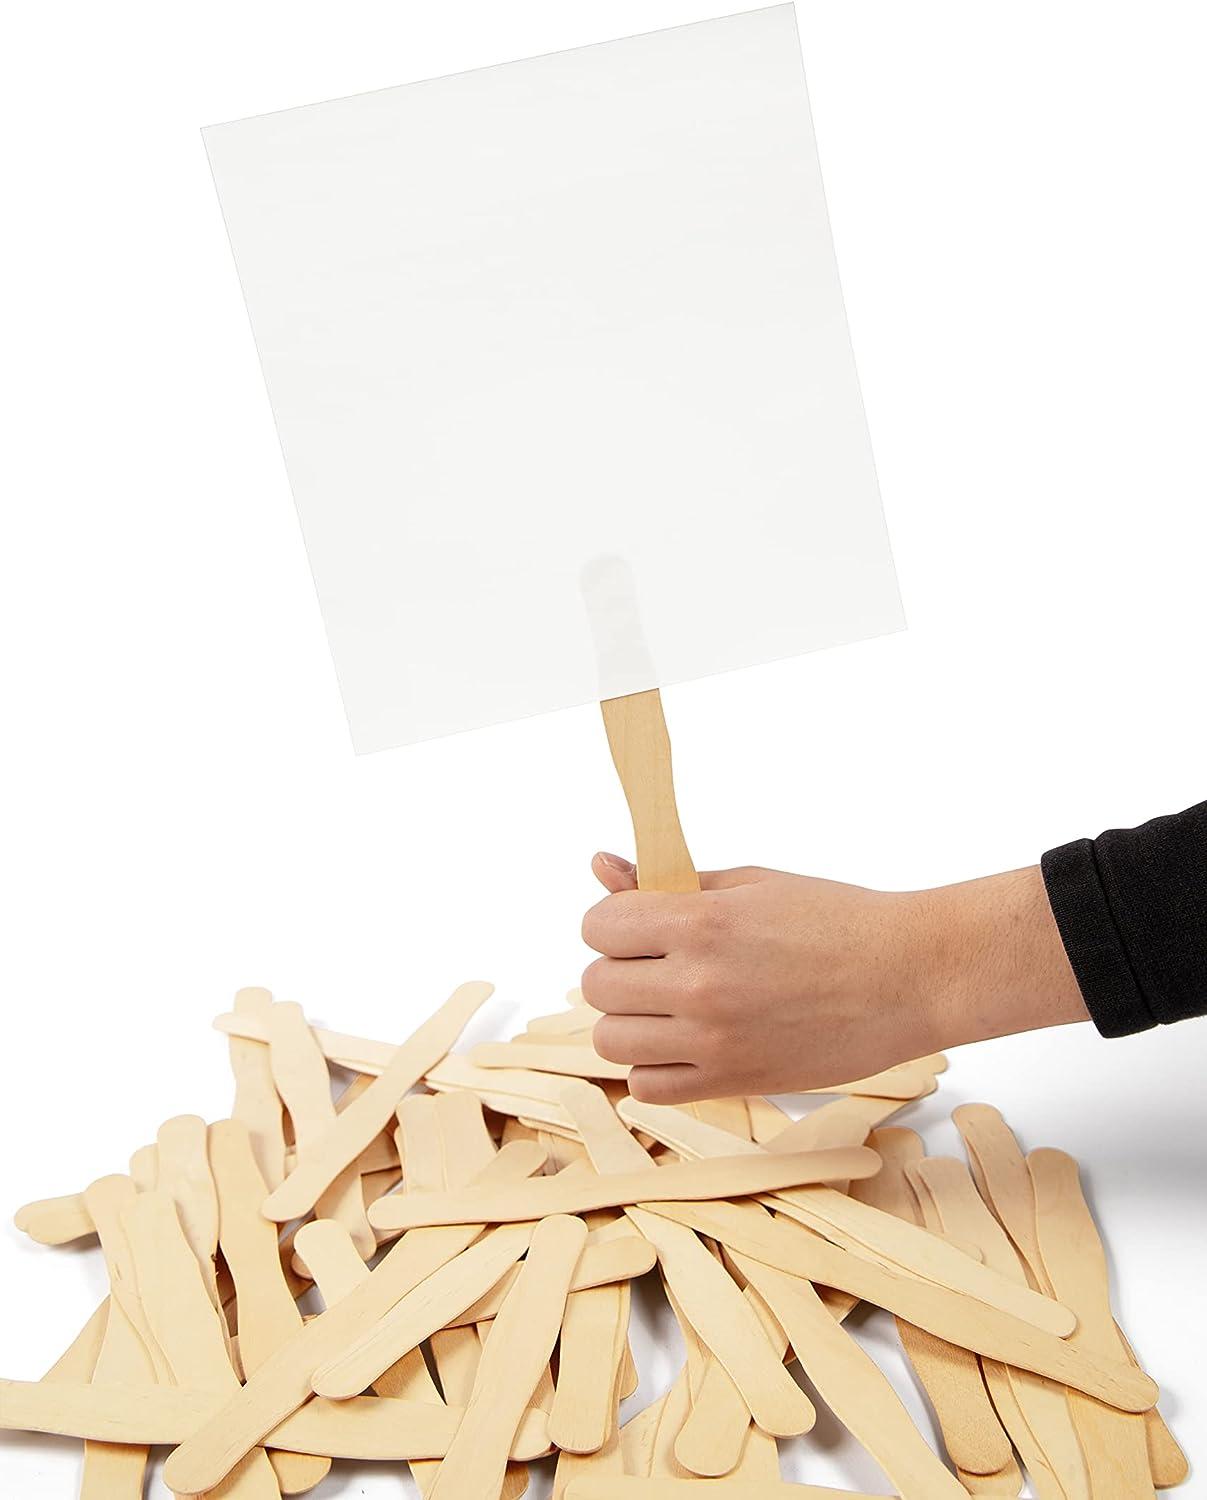 Jumbo Wood Popsicle Craft Sticks - Popsicle Sticks / Fan Sticks